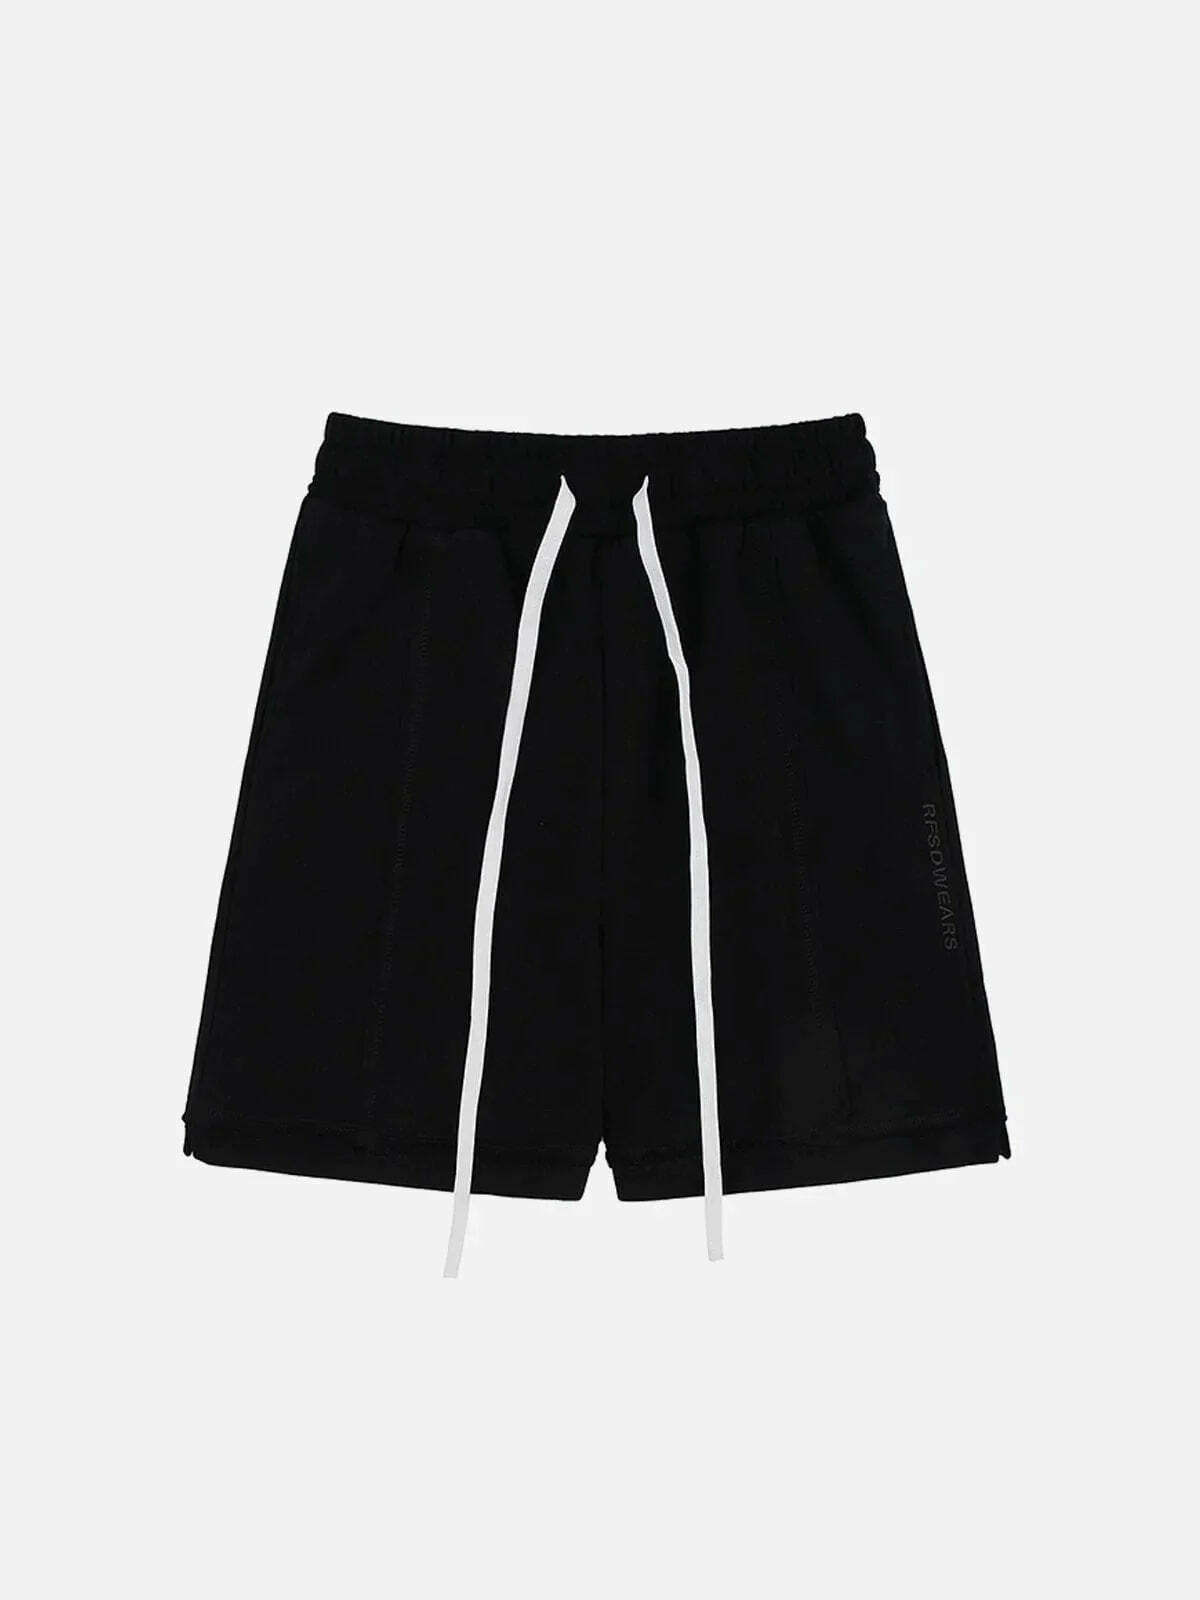 revolutionary doublewaistband shorts urban fashion essential 2403